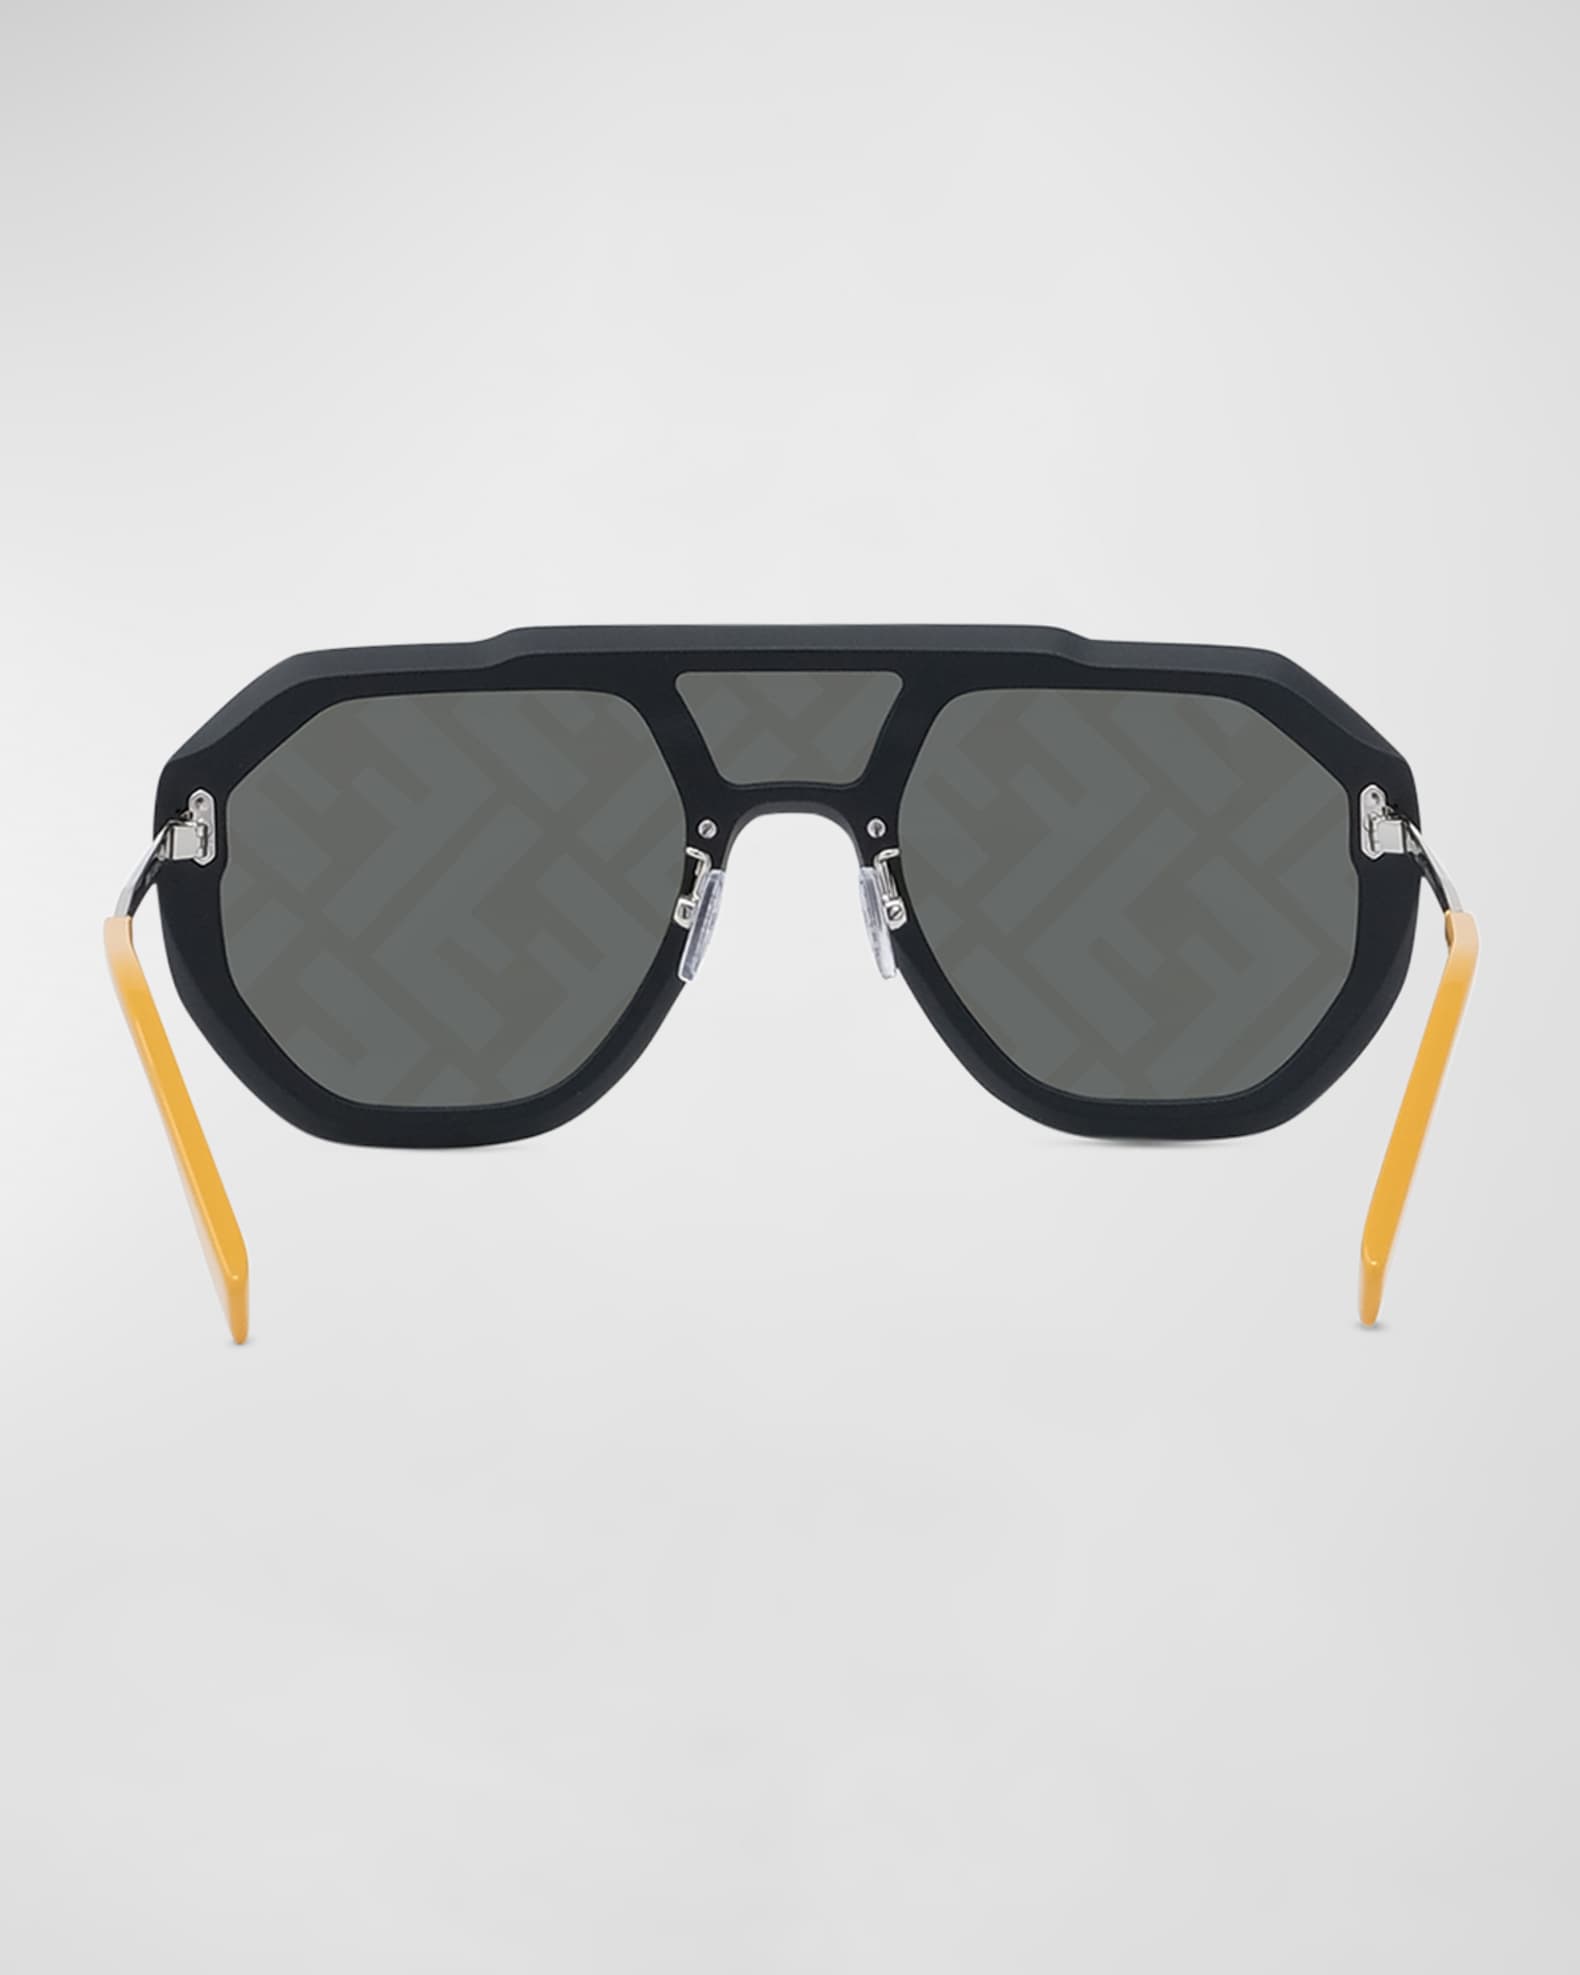 Carfia Small Acetate Polarized Sunglasses for Women UV Protection, Retro Double Bridge Eyewear Metal Brow Round Sunnies